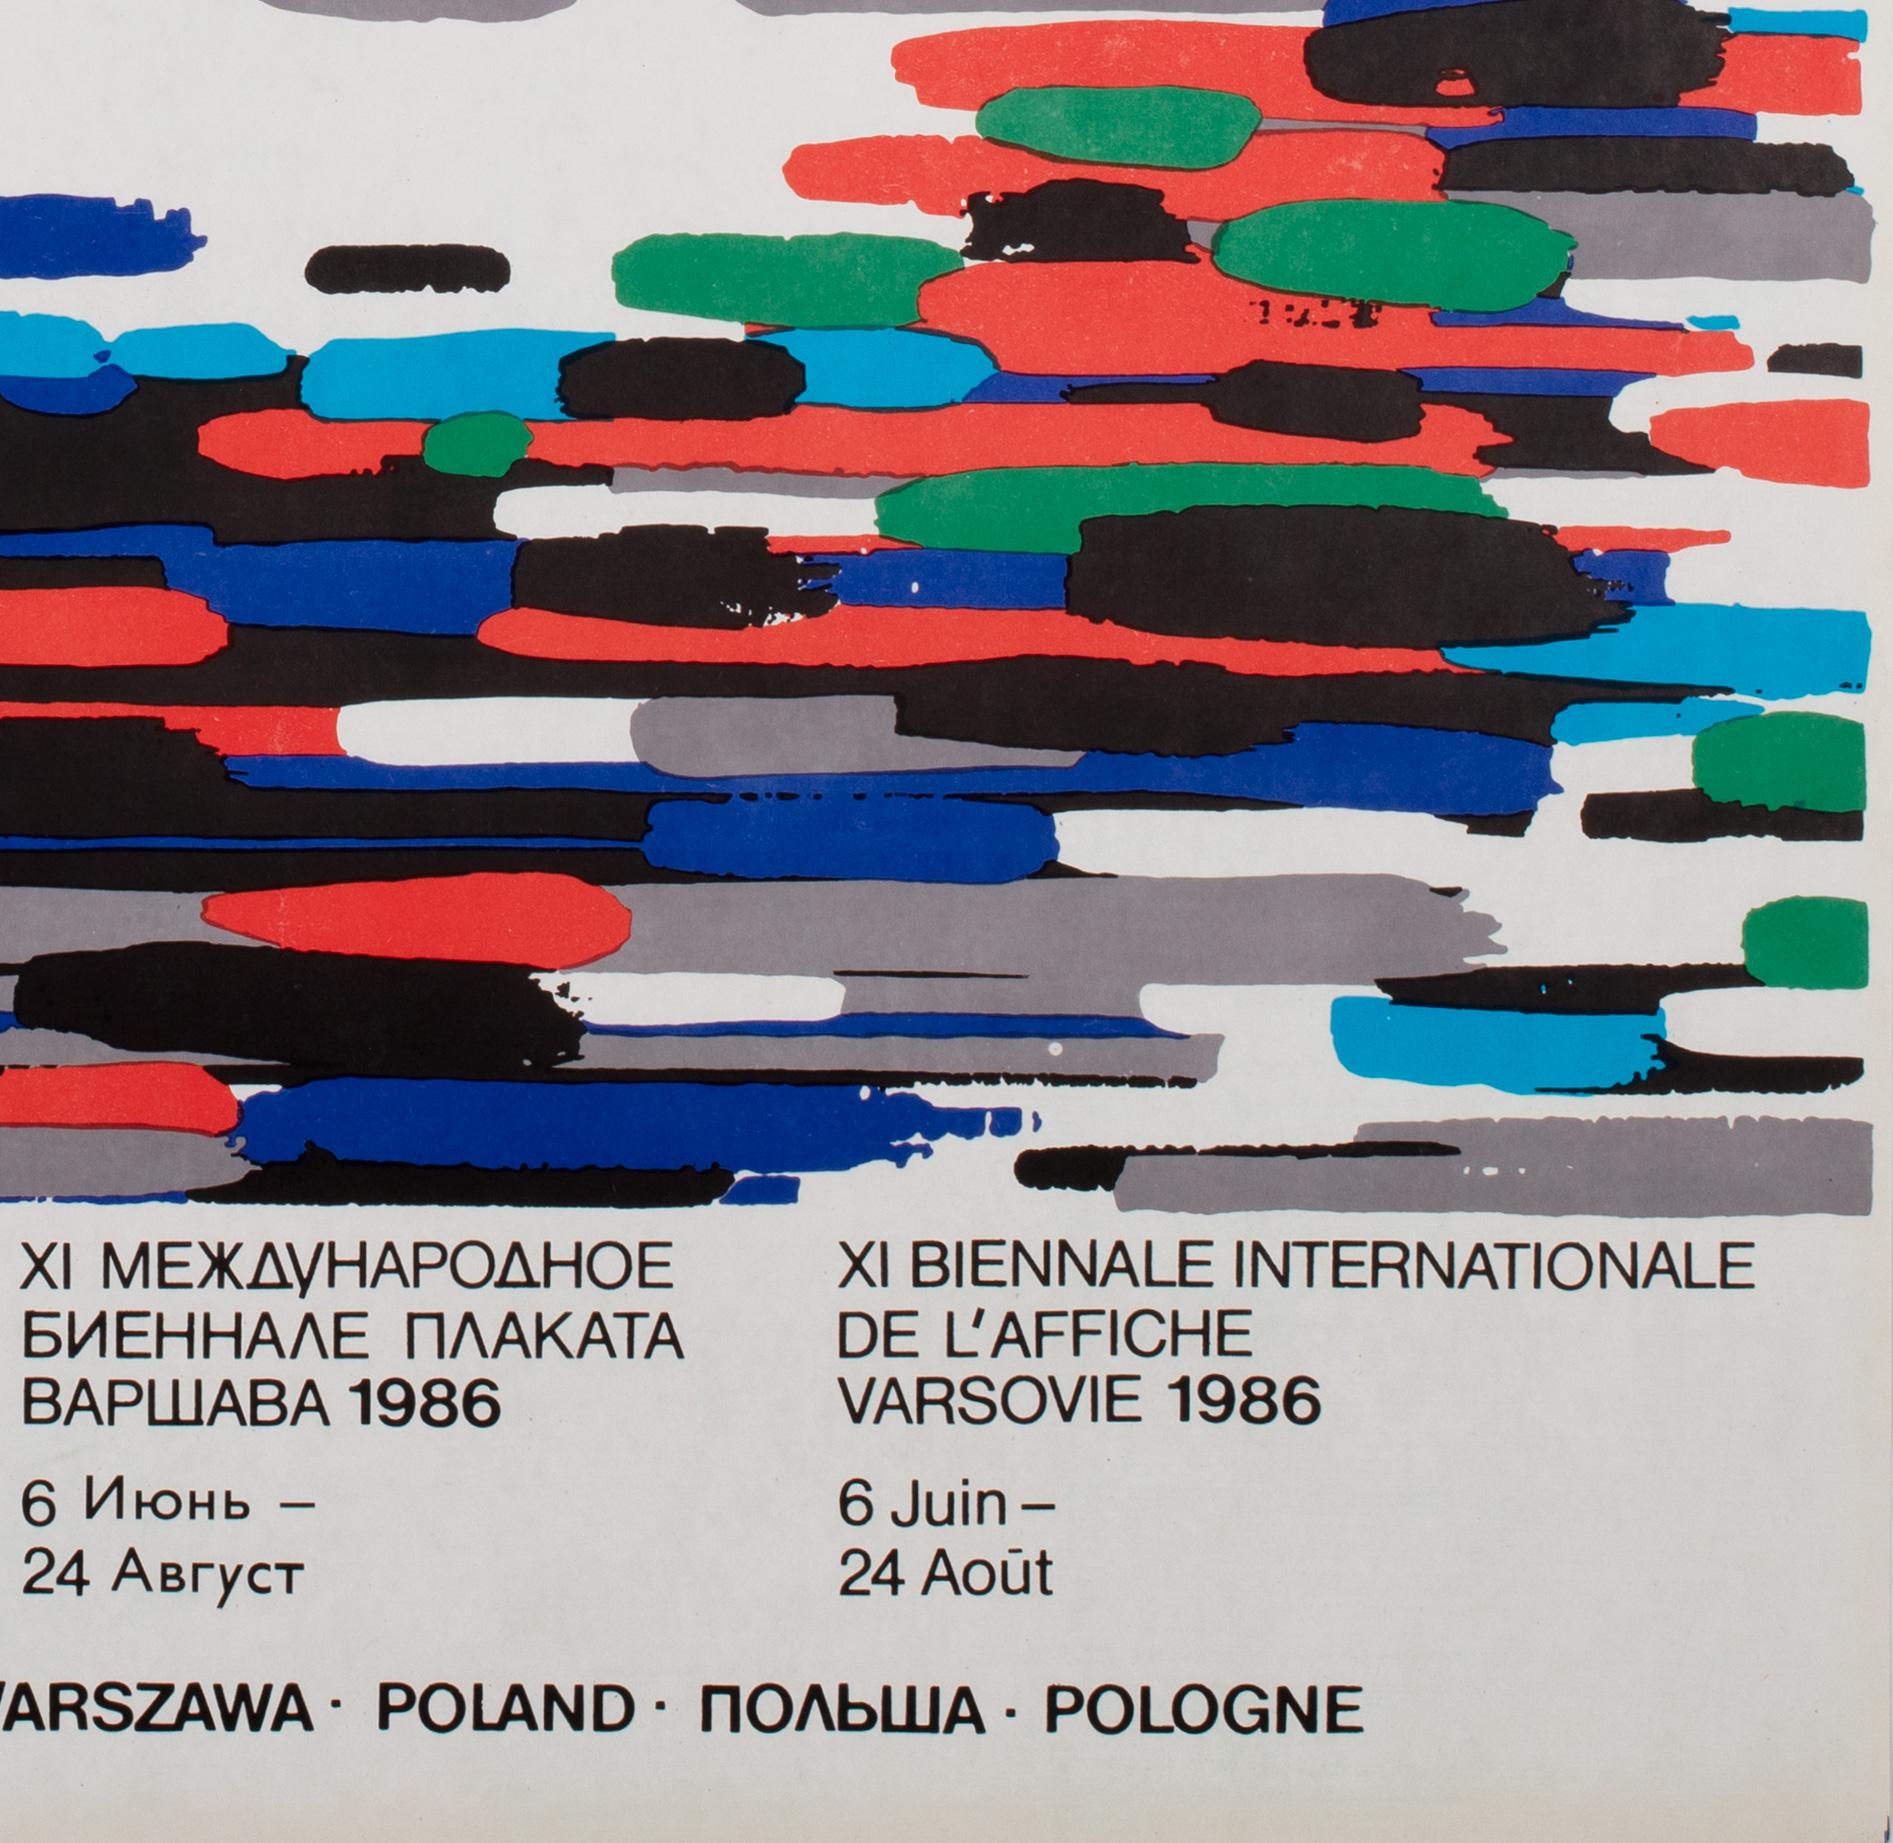 11th International Poster Biennale Warsaw 1986, Waldemar Swierzy 3